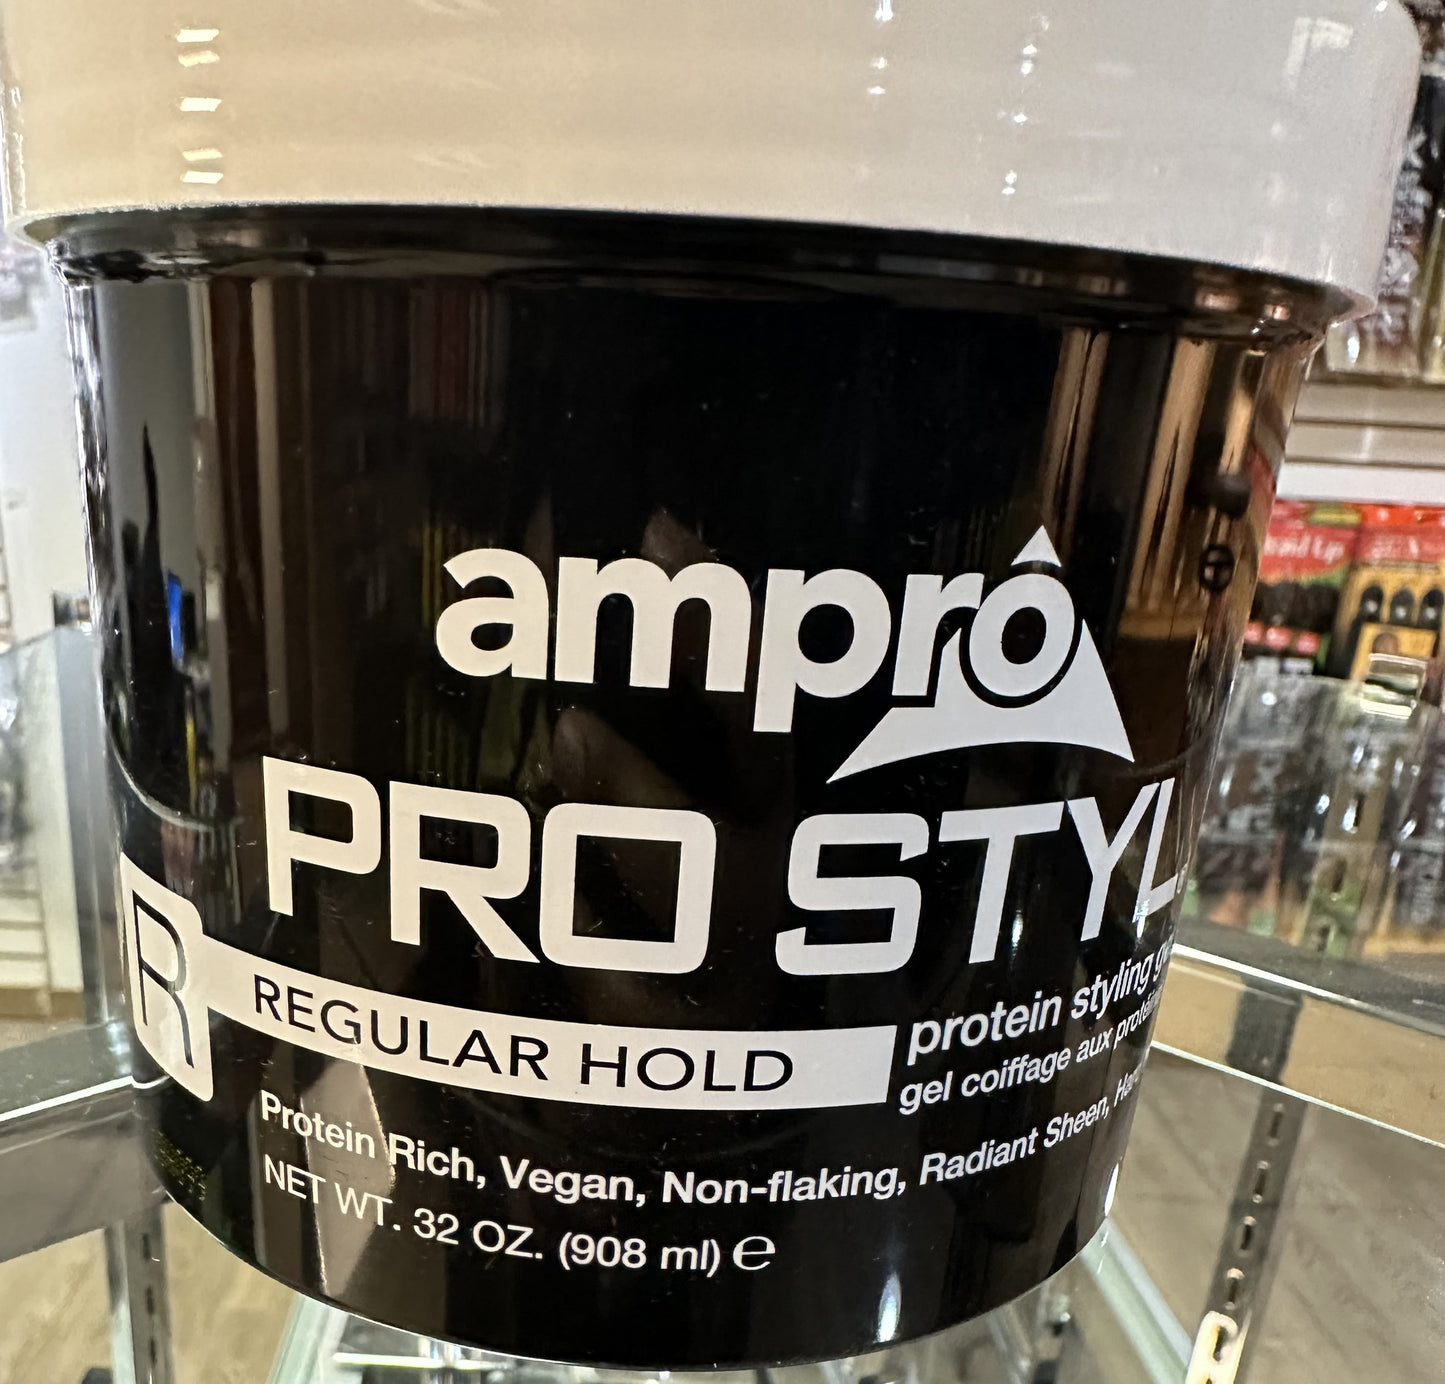 AMPRO PRO STYL GEL REGULAR HOLD - 32 OZ